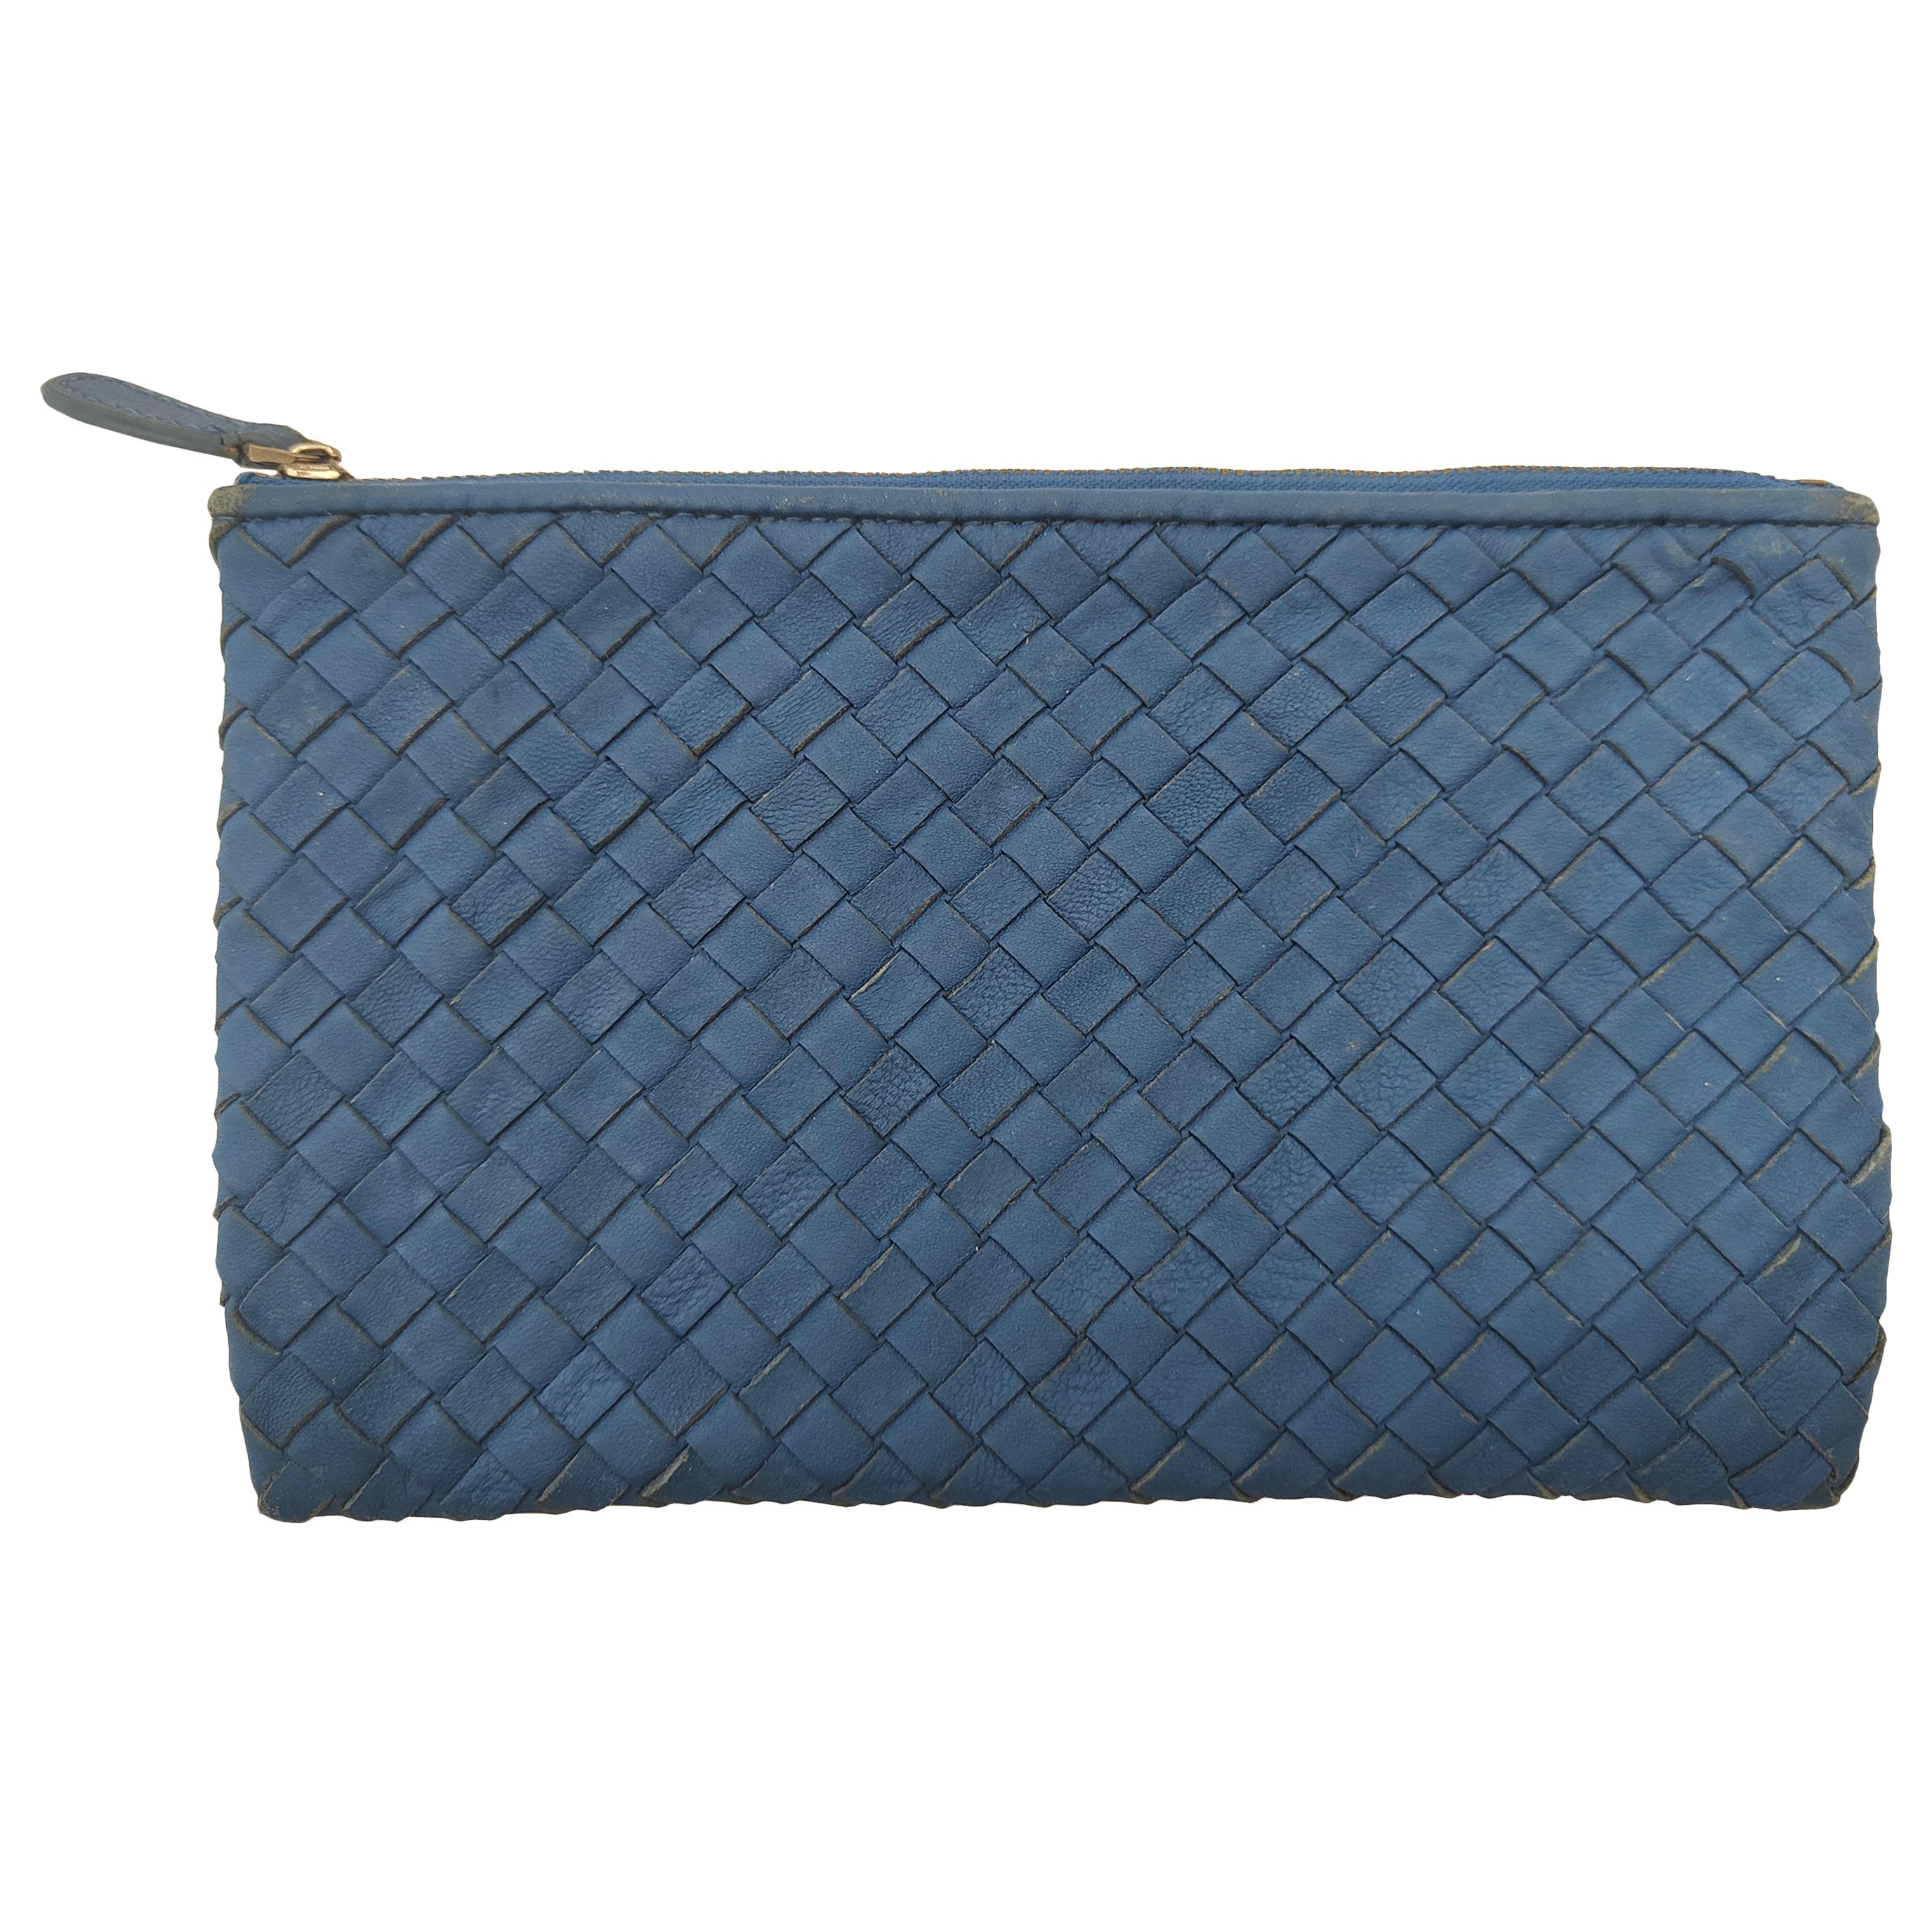 Botttega Veneta blue leather clutch wallet